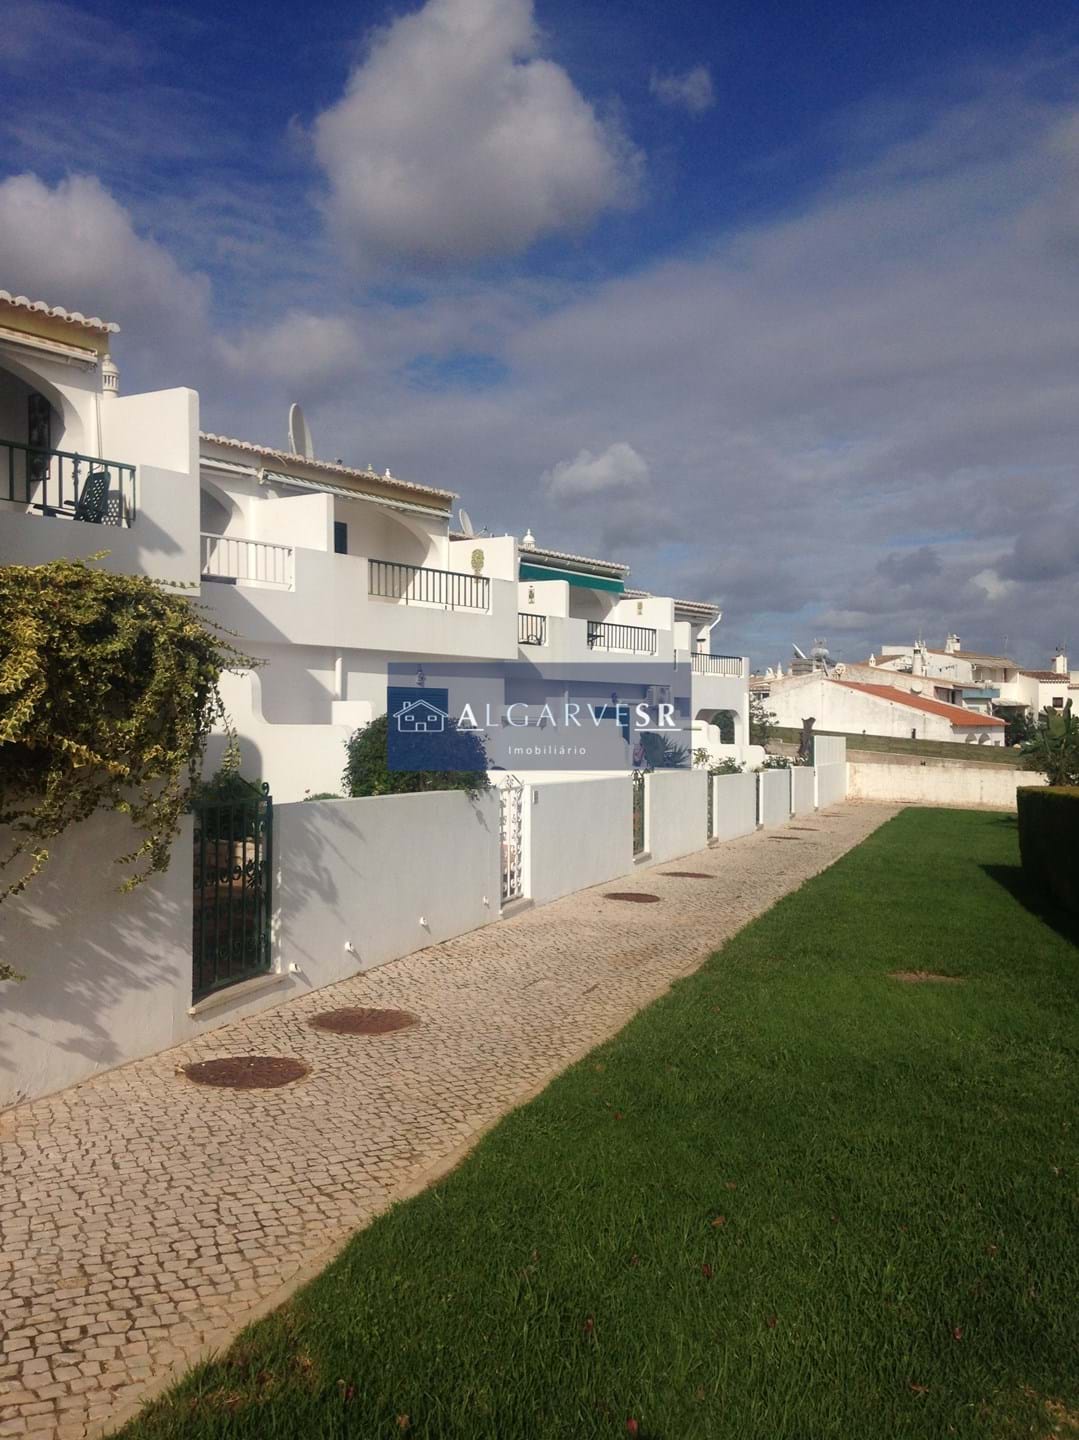 Fabulous two bedroom town house in desirable location - Praia da Luz